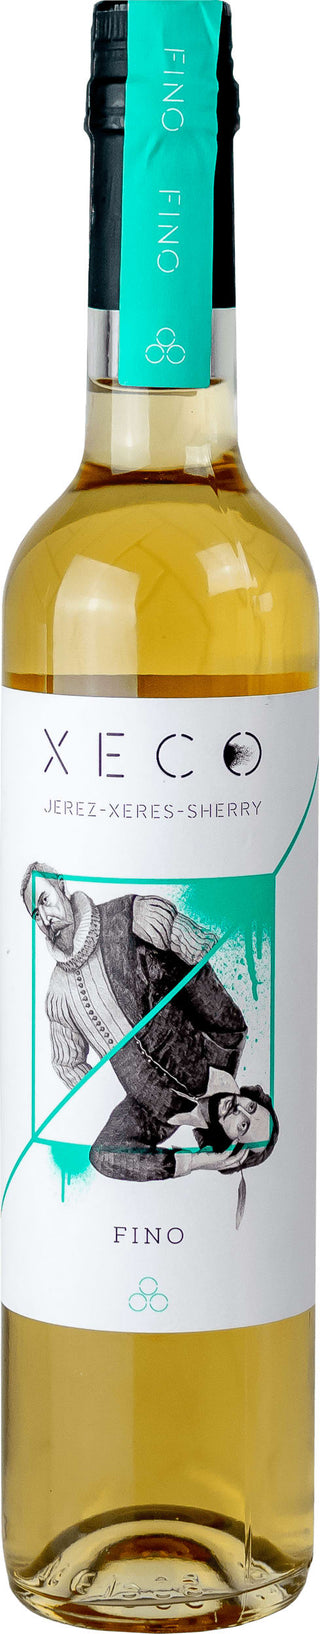 Xeco Fino, NV6x75cl - Just Wines 